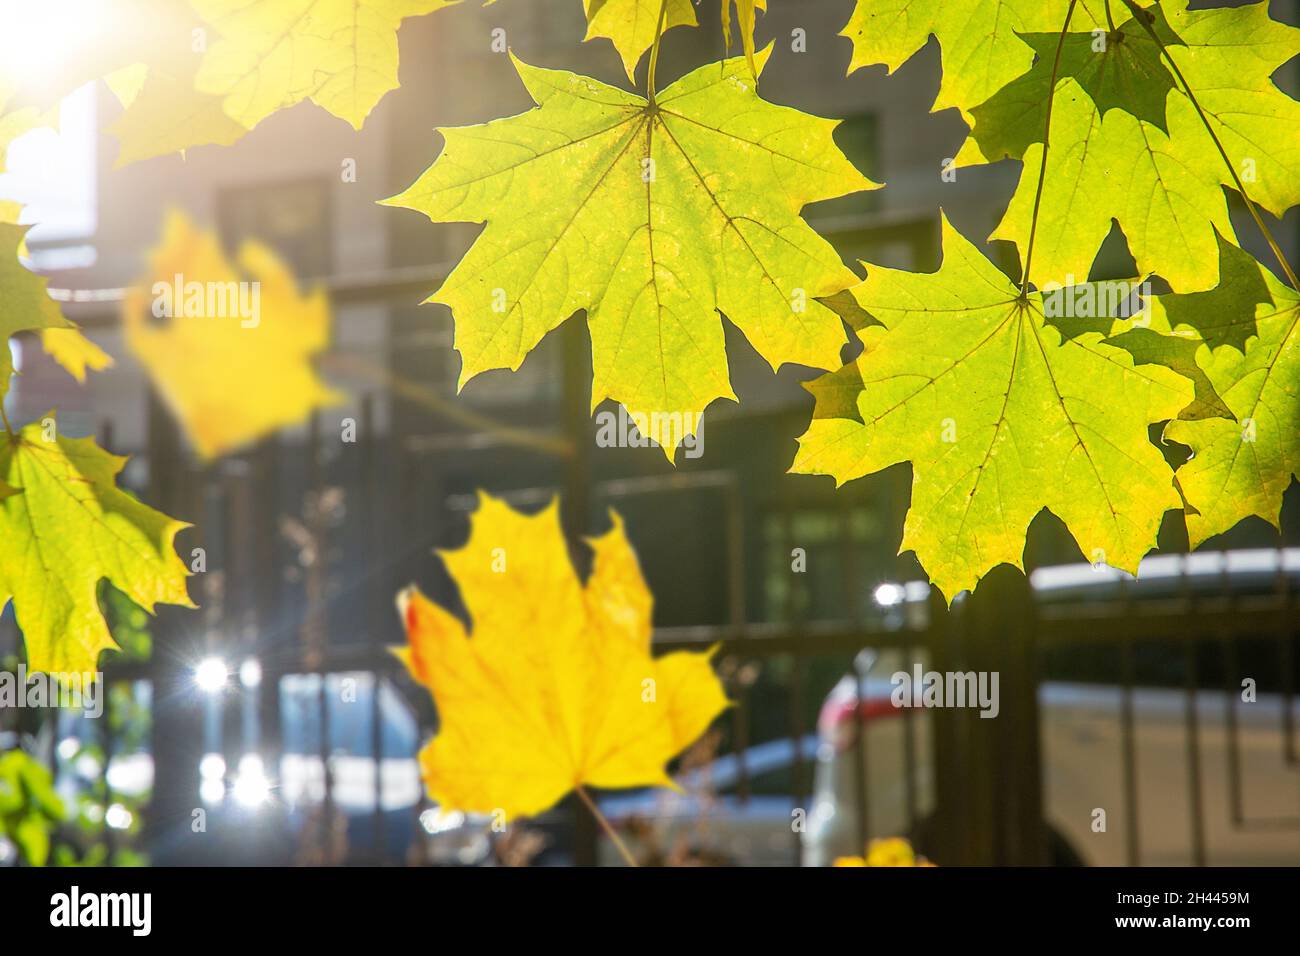 falling autumn yelow leafs on blured cityl background Stock Photo